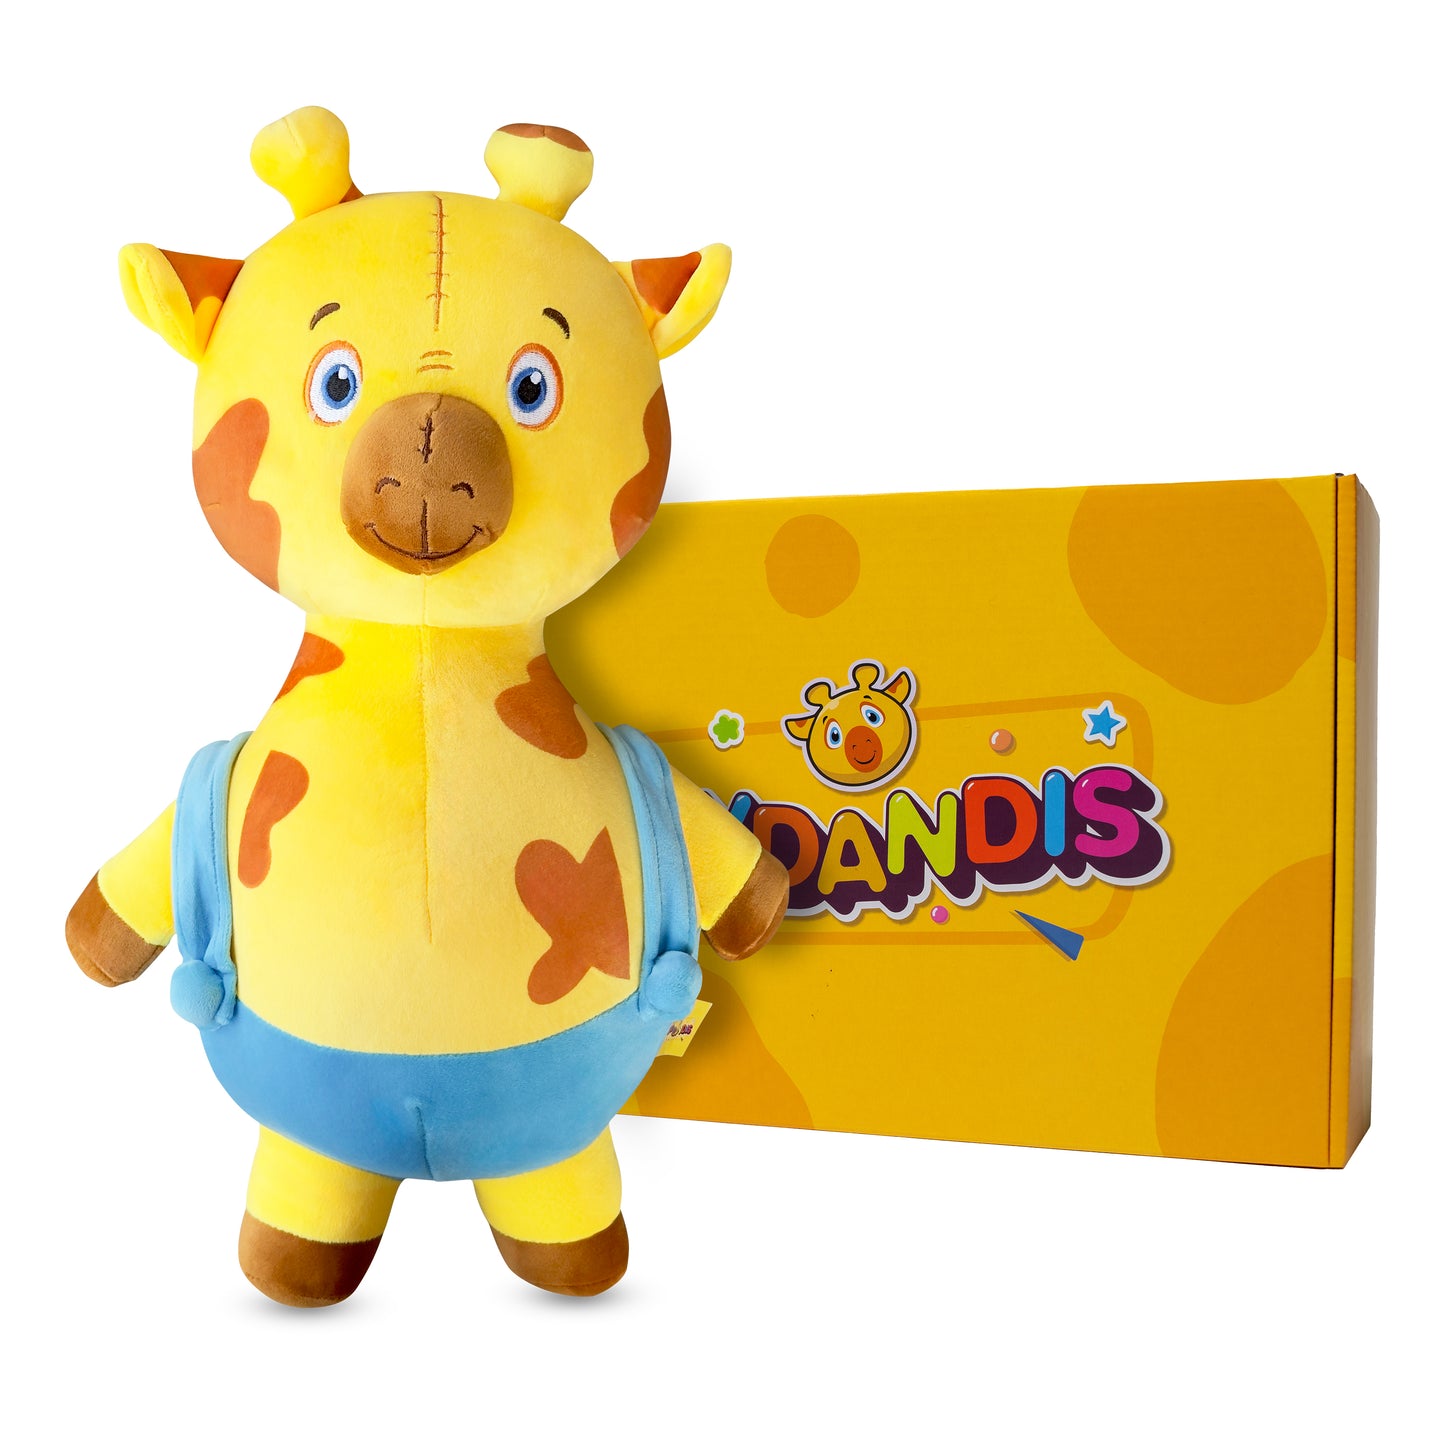  Giraffe stuffed animal plush toy with branded Happydandis gift box